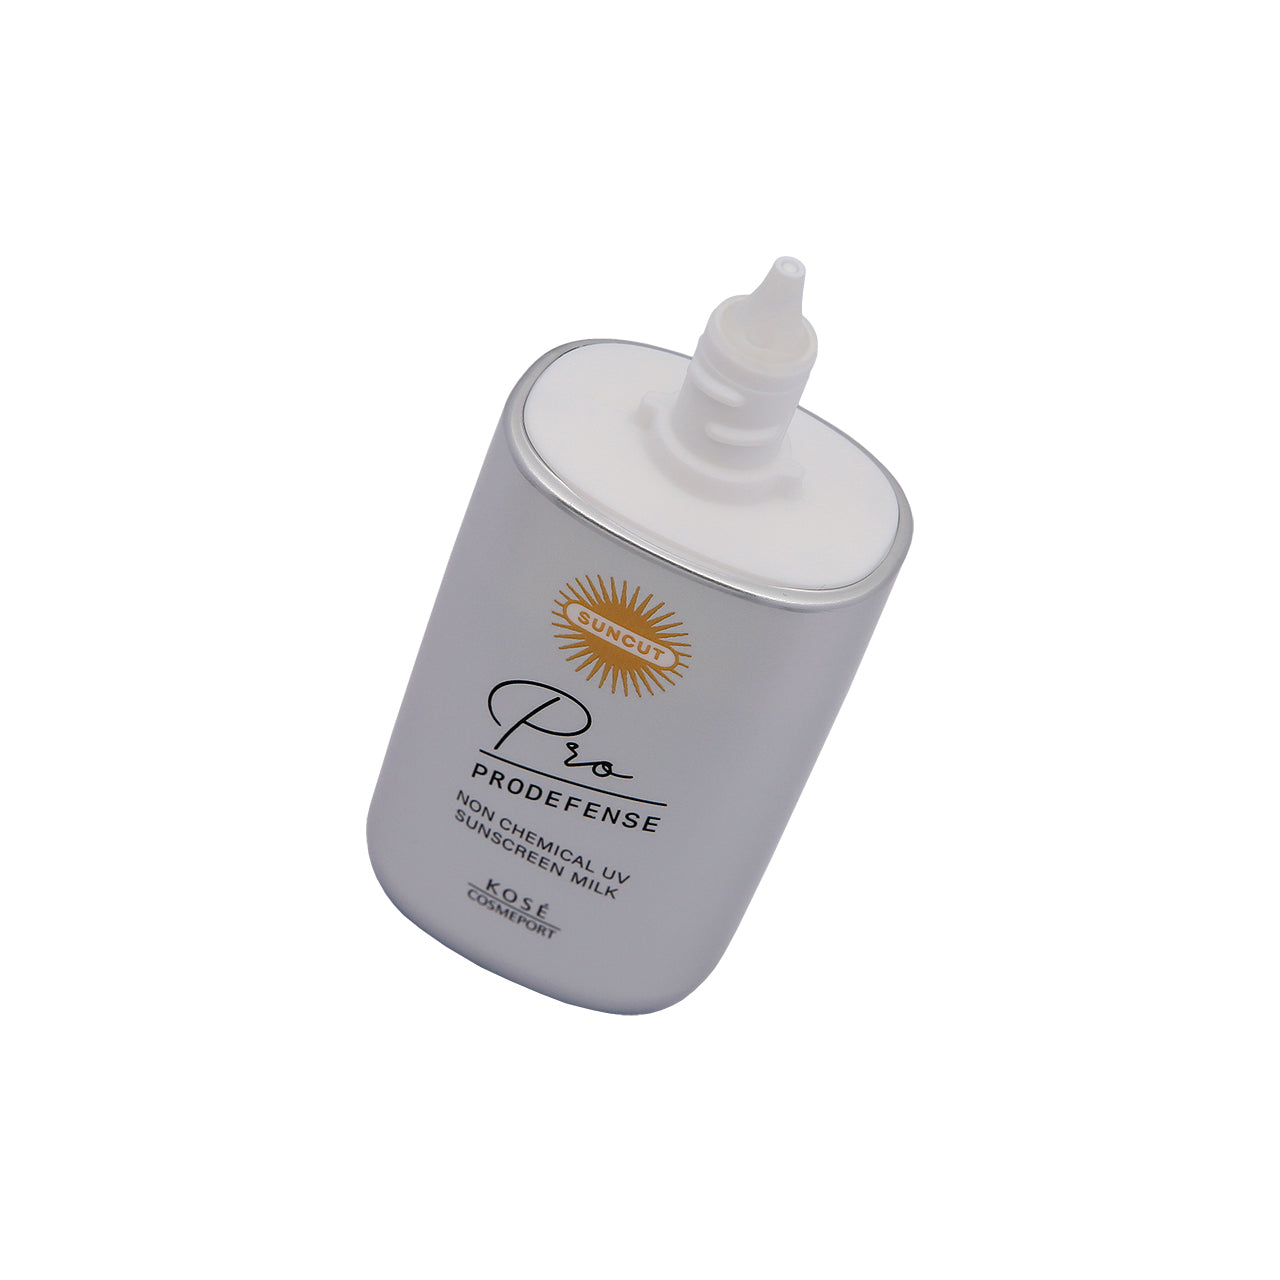 Kose Cosmeport Suncut Prodefense Non Chemical UV Suncreen Milk SPF50+ PA++++ 60ml | Sasa Global eShop